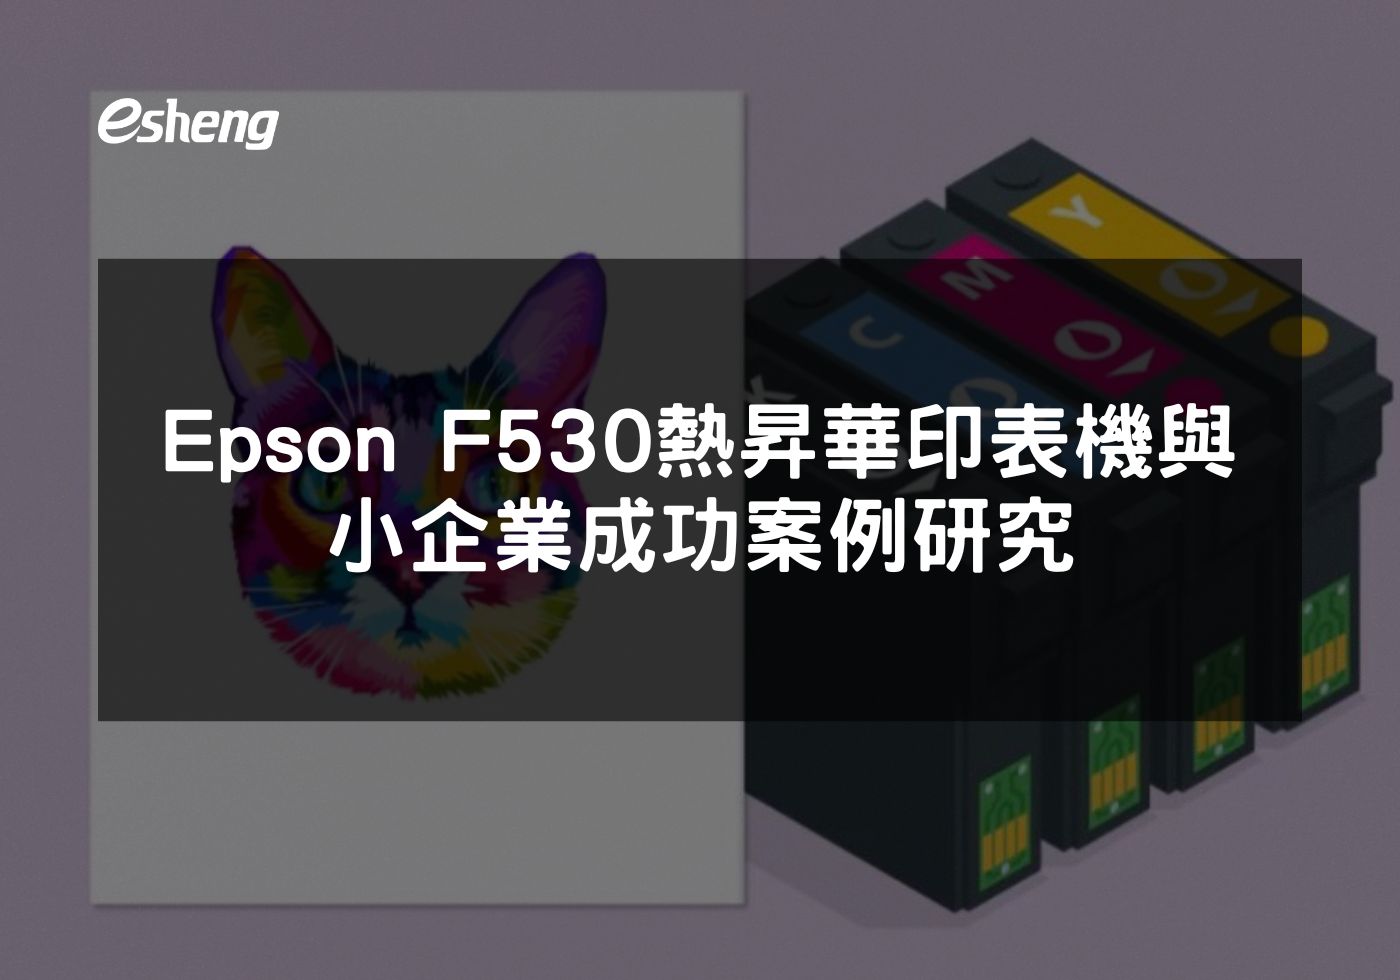 Epson F530印表機助力小企業實現高效益成長